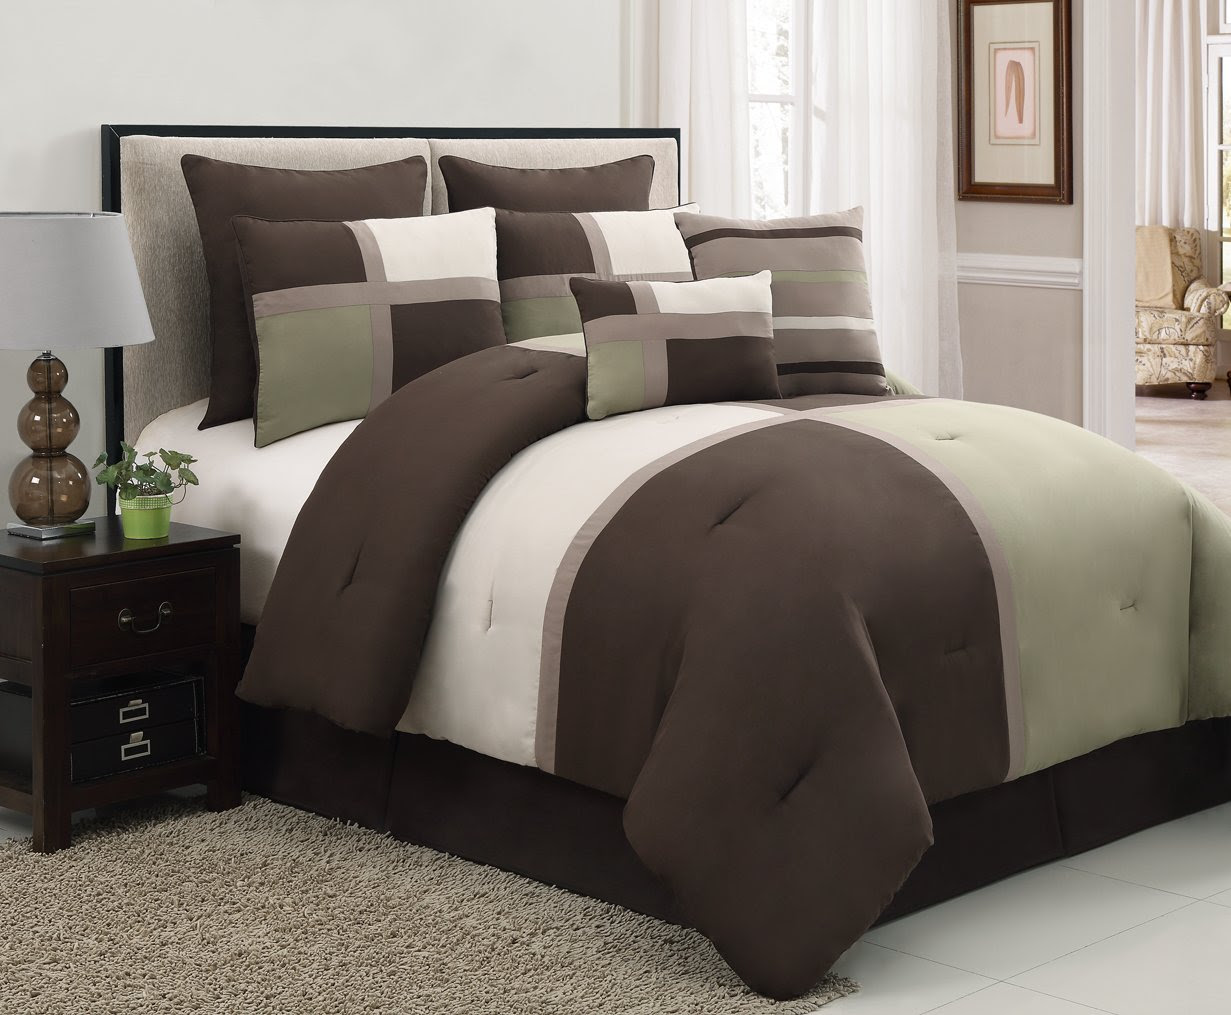 Bedding Sets for Men: 8-Piece Brown & Tan Bed-in-a-Bag Comforter ...